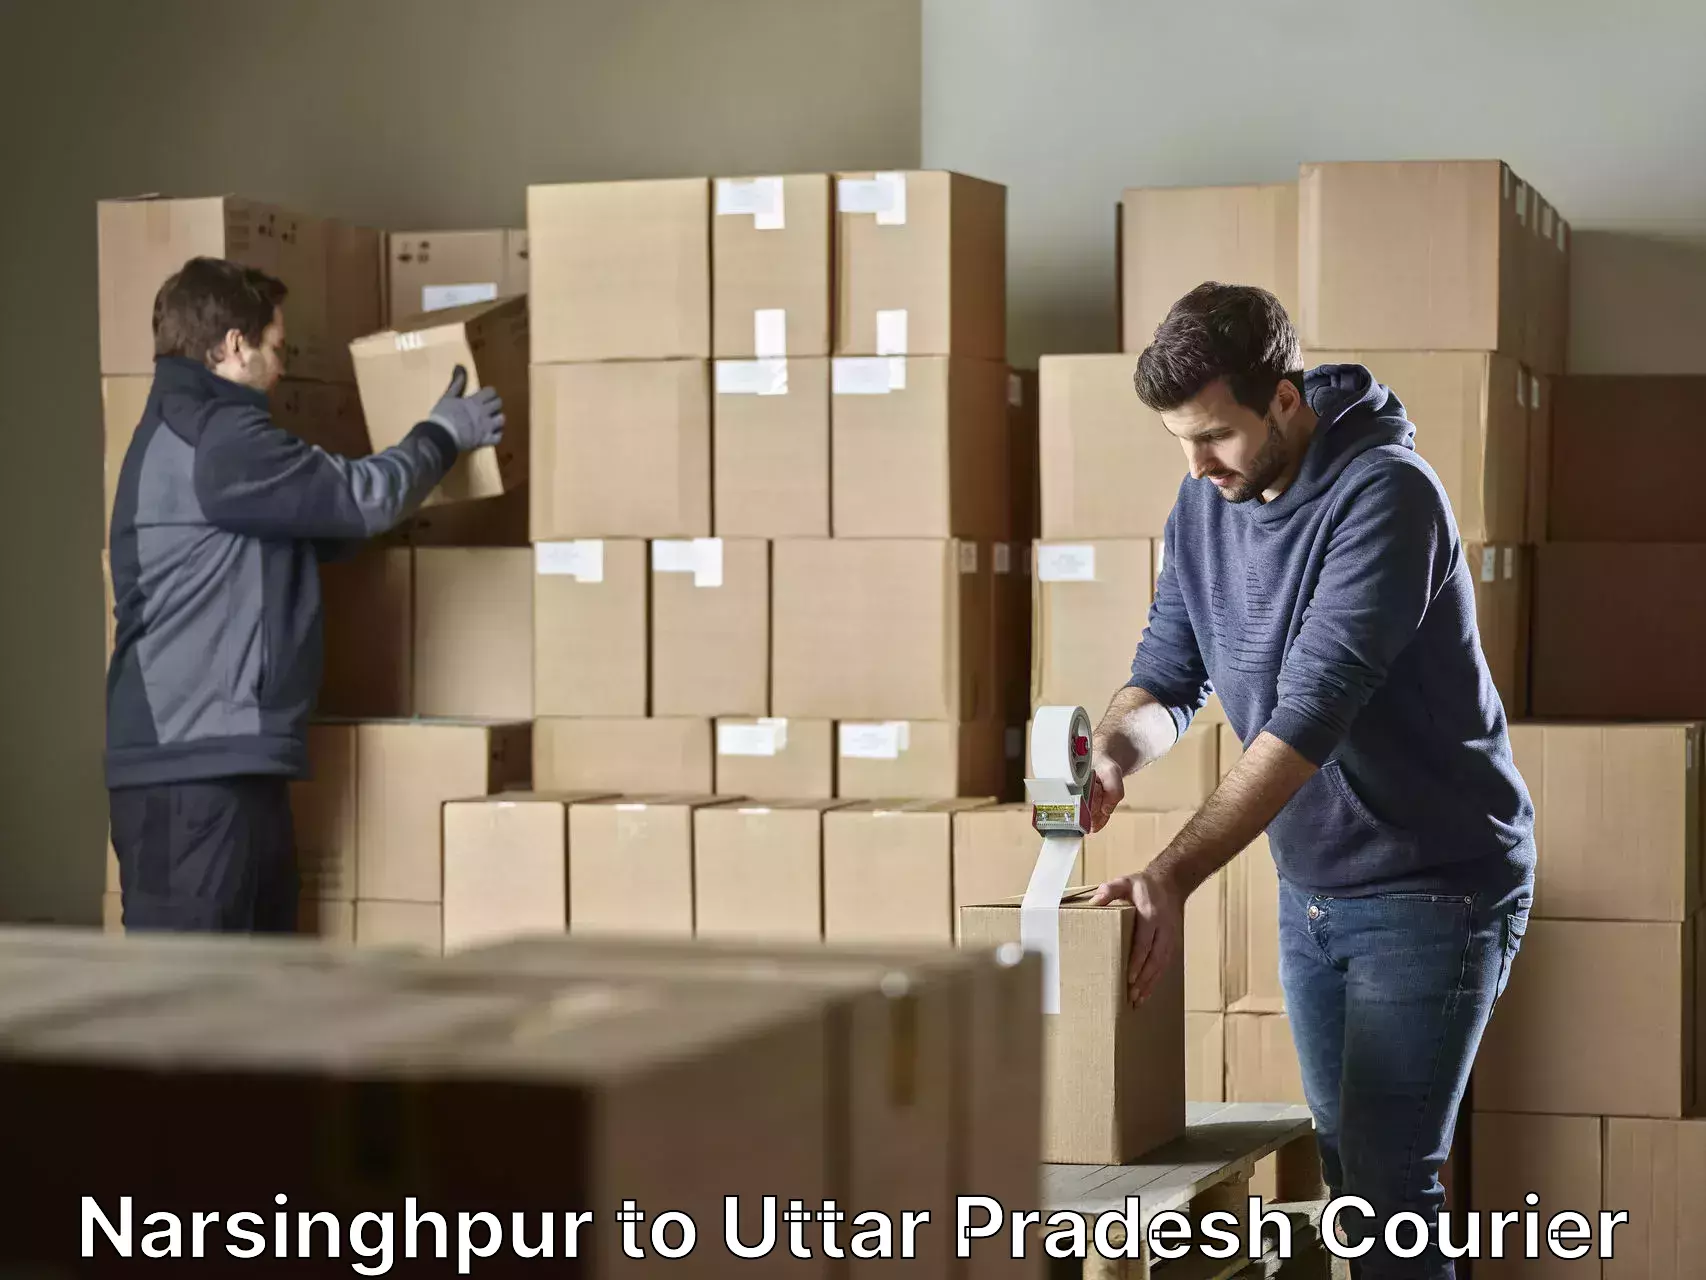 Furniture delivery service Narsinghpur to Mishrikh